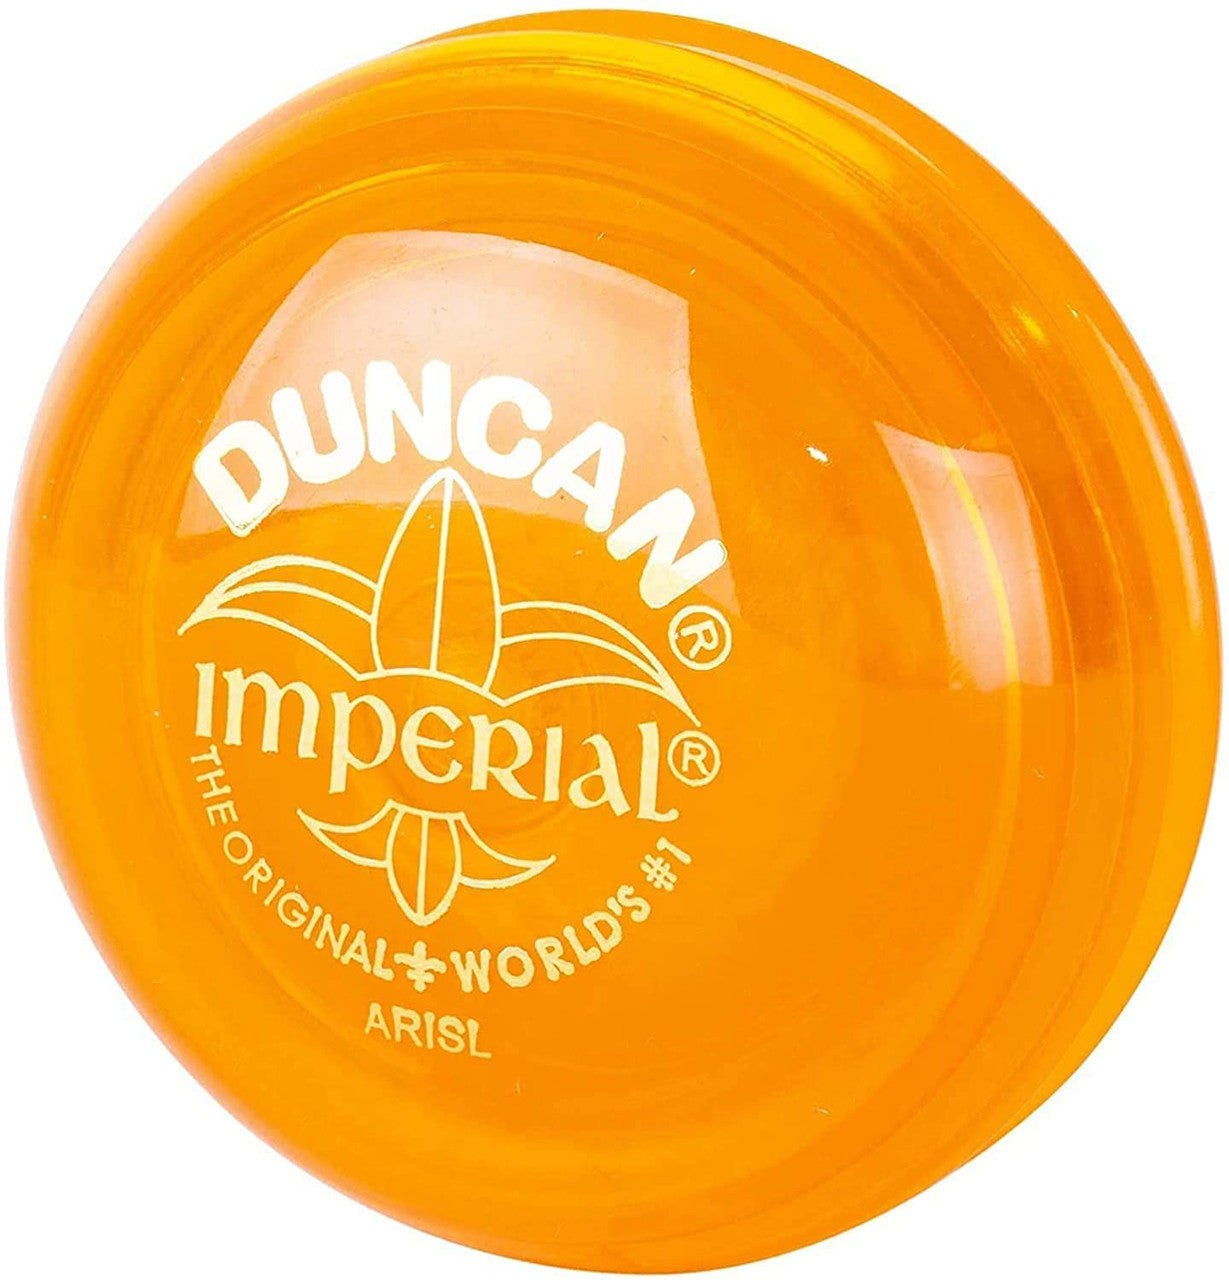 Duncan Classic Yo-yo: Imperial